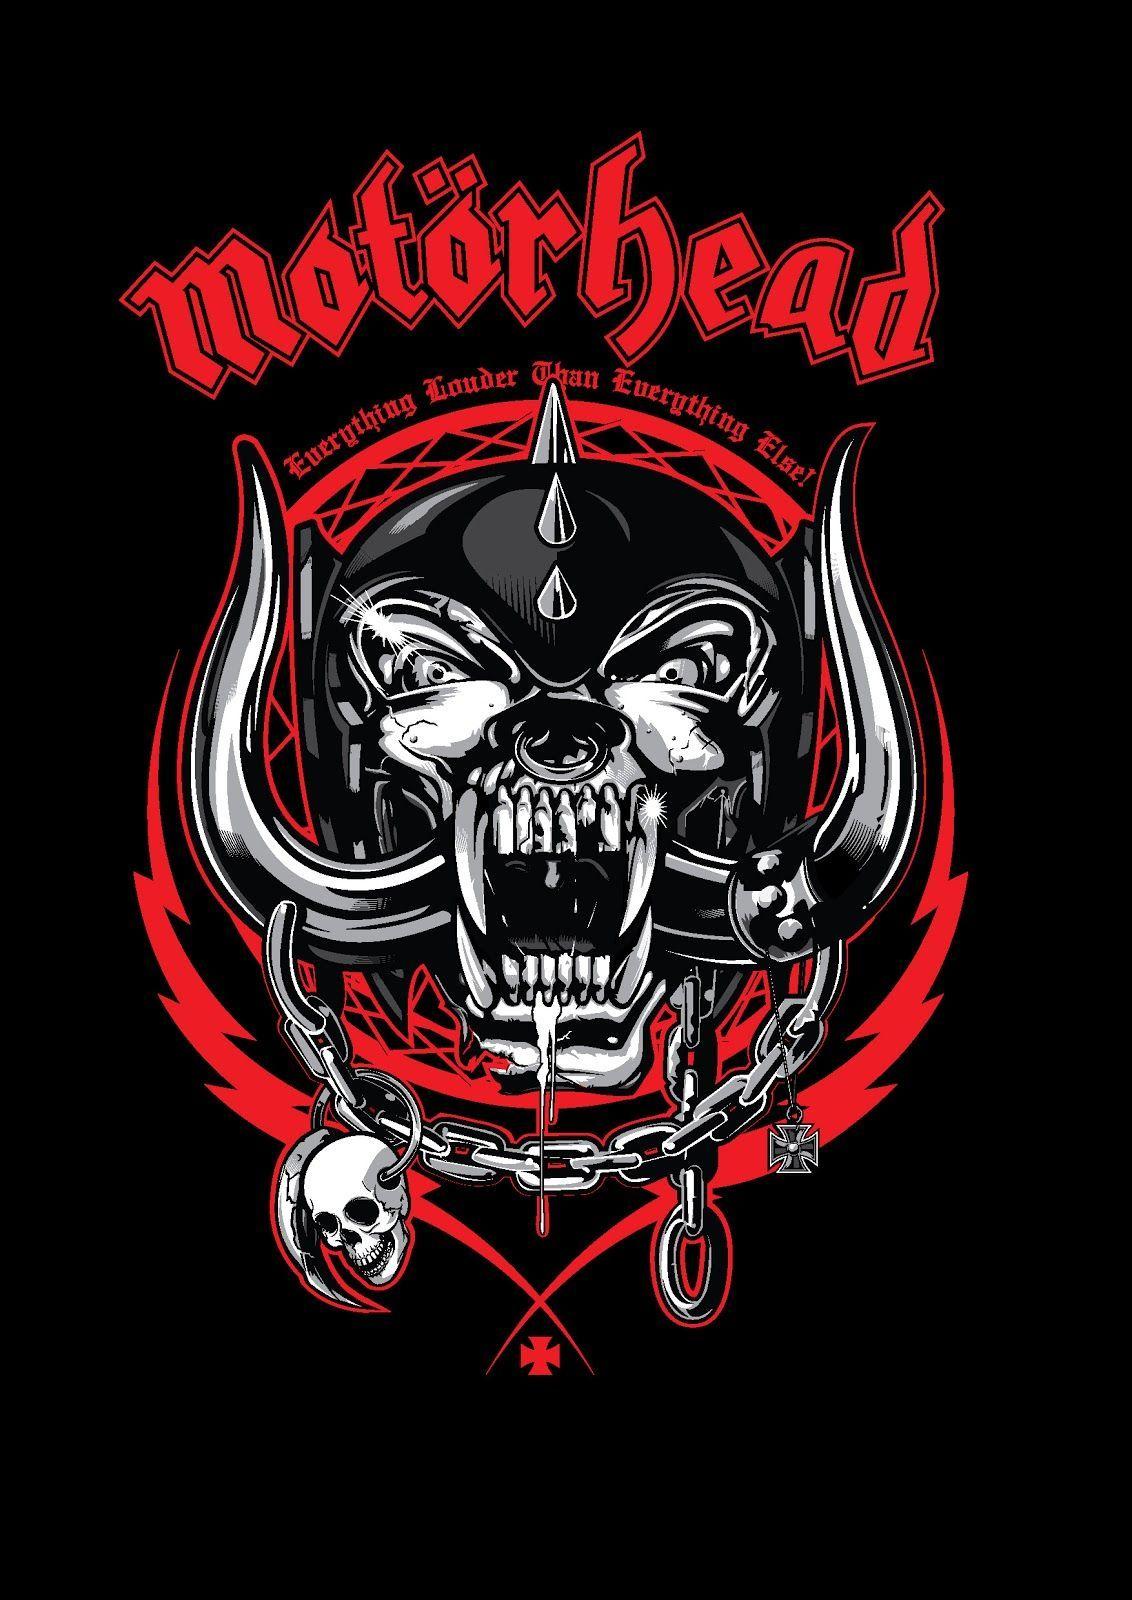 Motorhead Logo - Afbeeldingsresultaat voor motorhead logo | patterns | Music, Rock ...